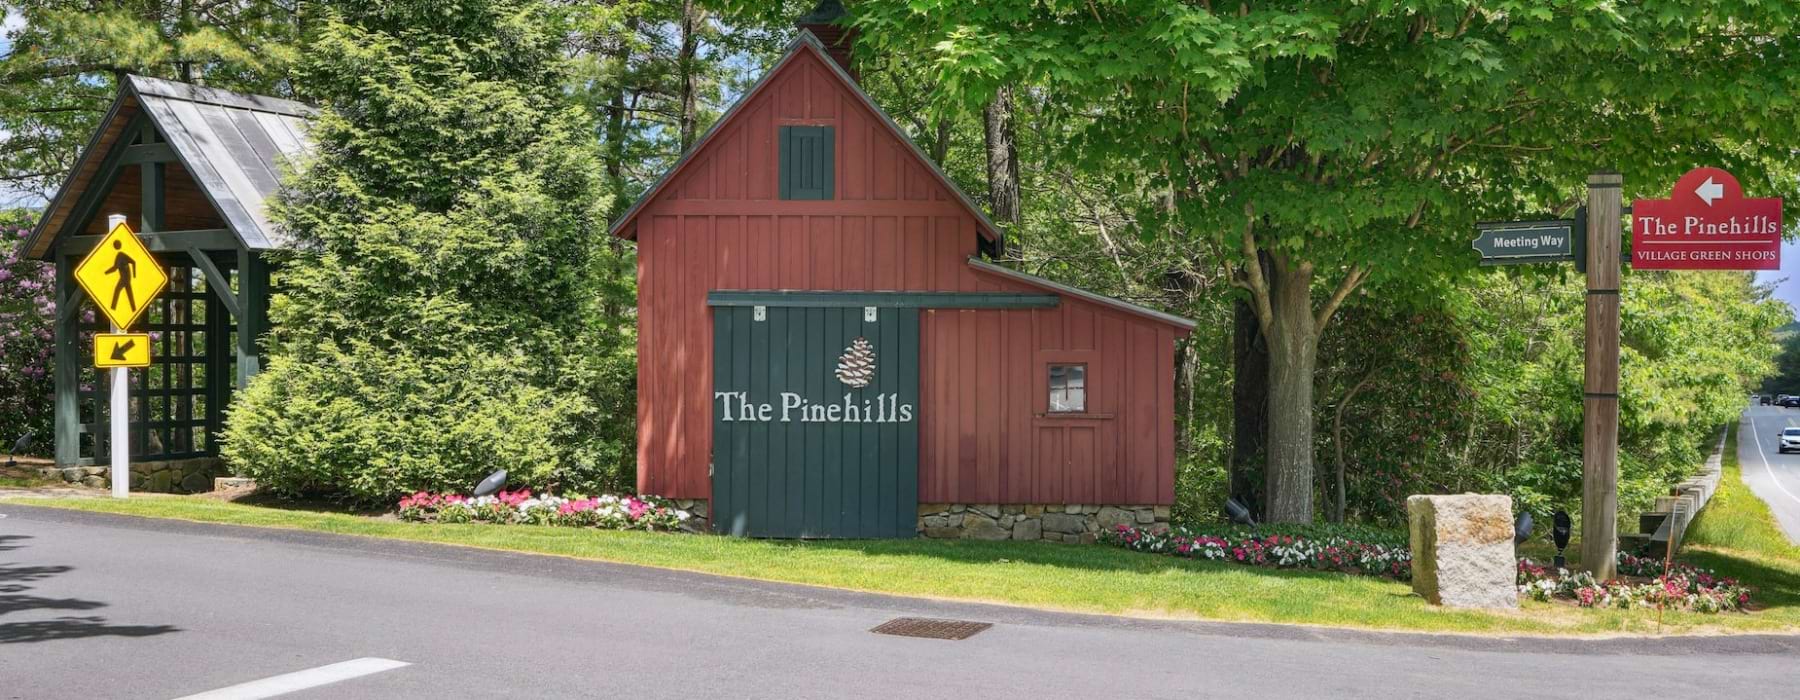 The Pinehills red barn at Meeting Way street entry